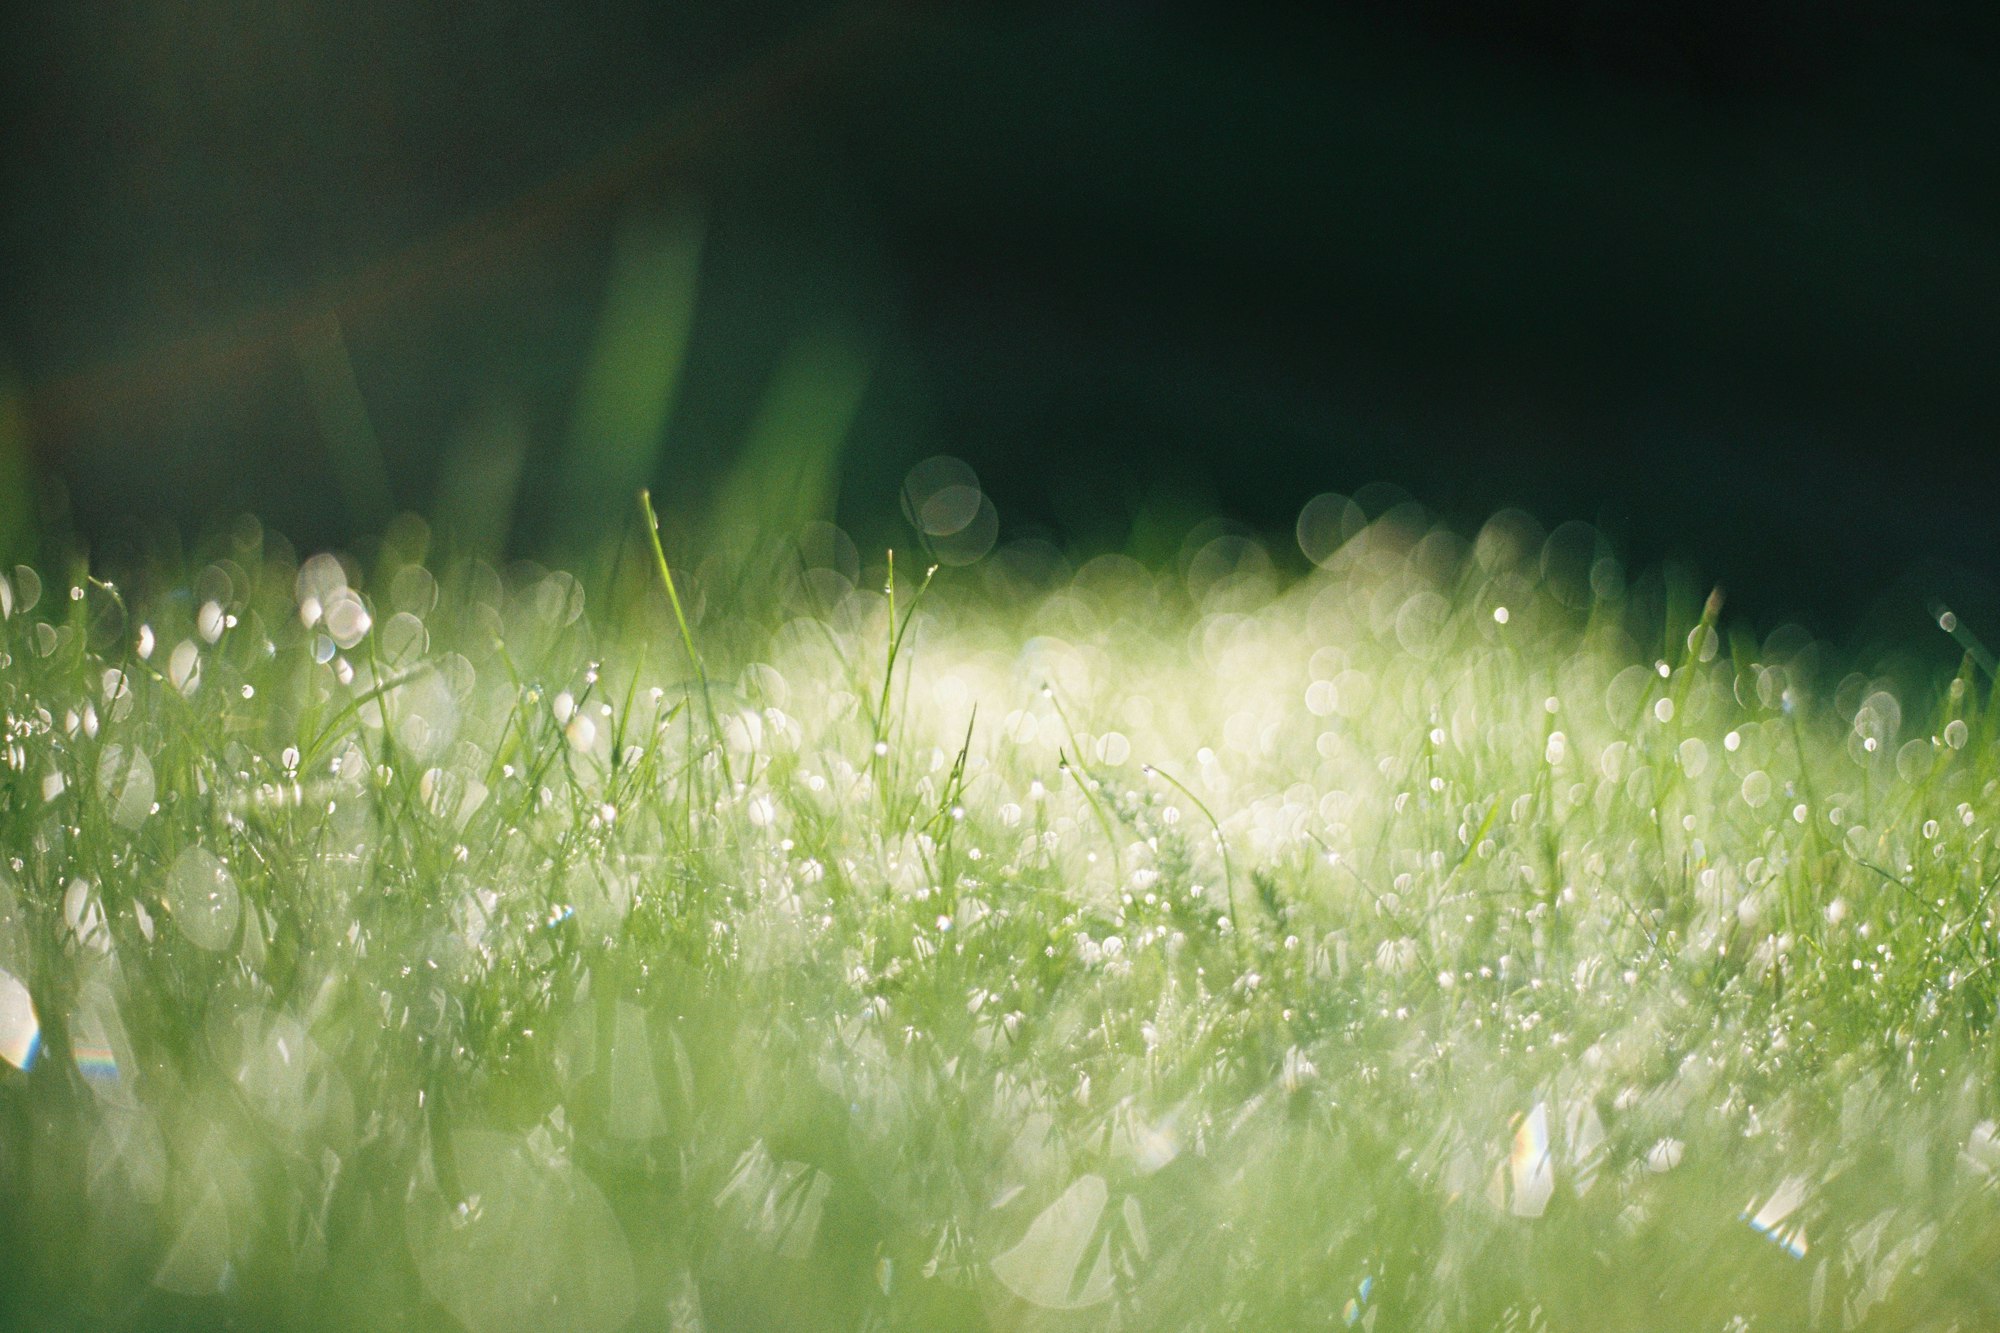 Dew drops glistening on wet green Spring grass lawn. Shot on film.